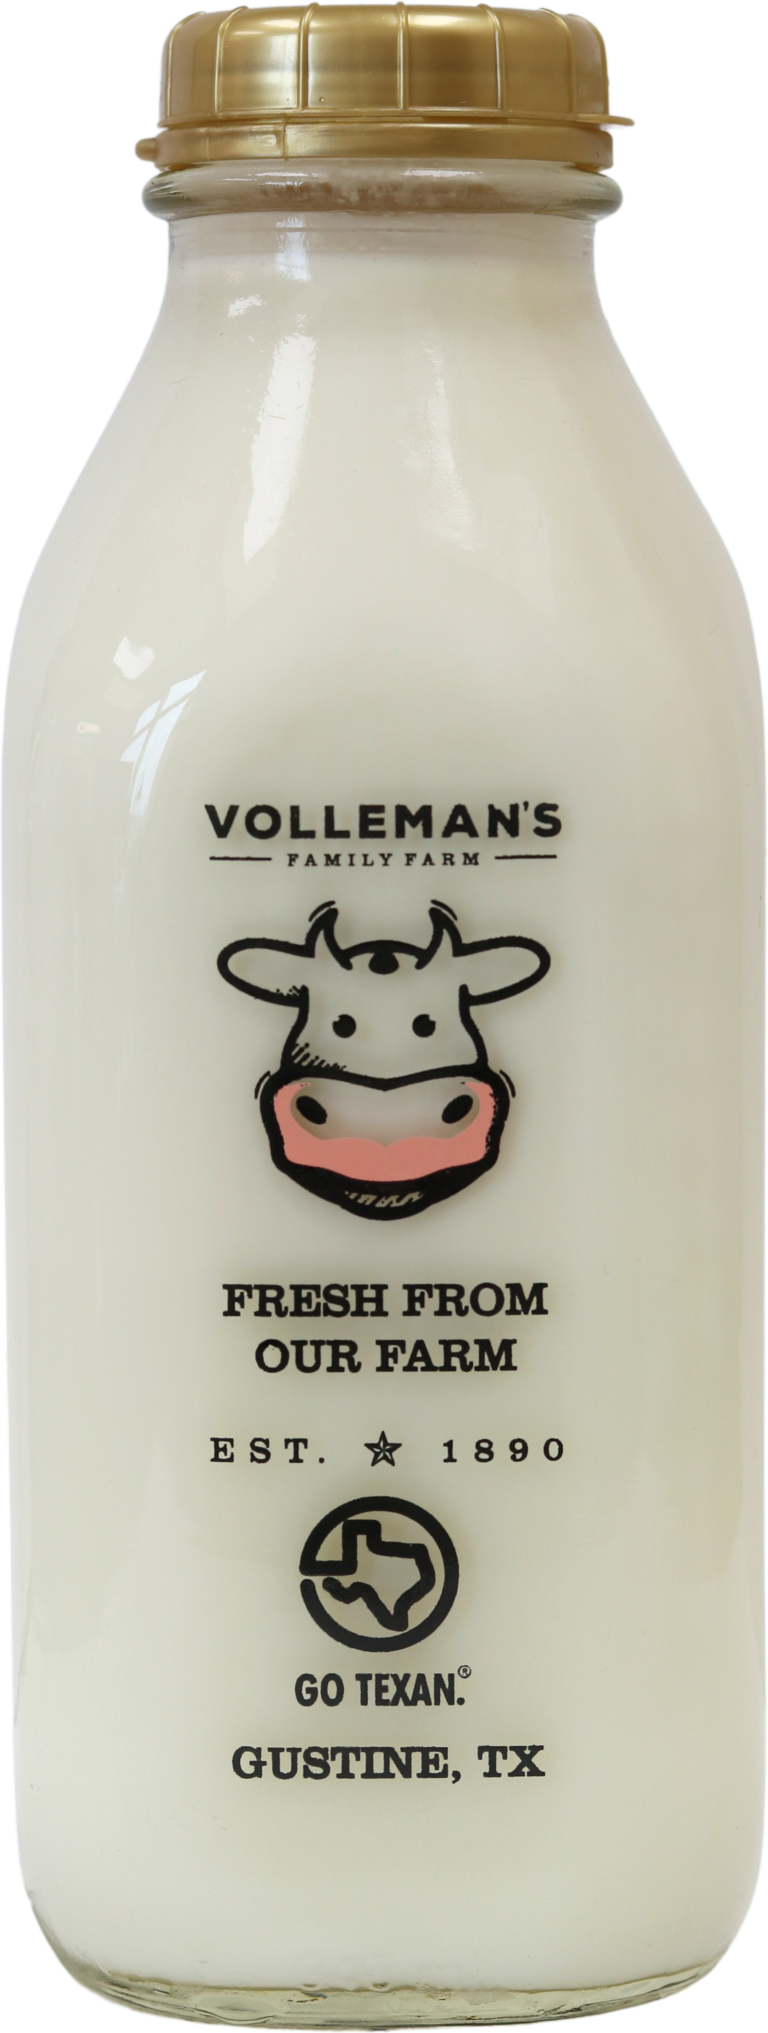 Volleman's Texas Home Made Vanilla